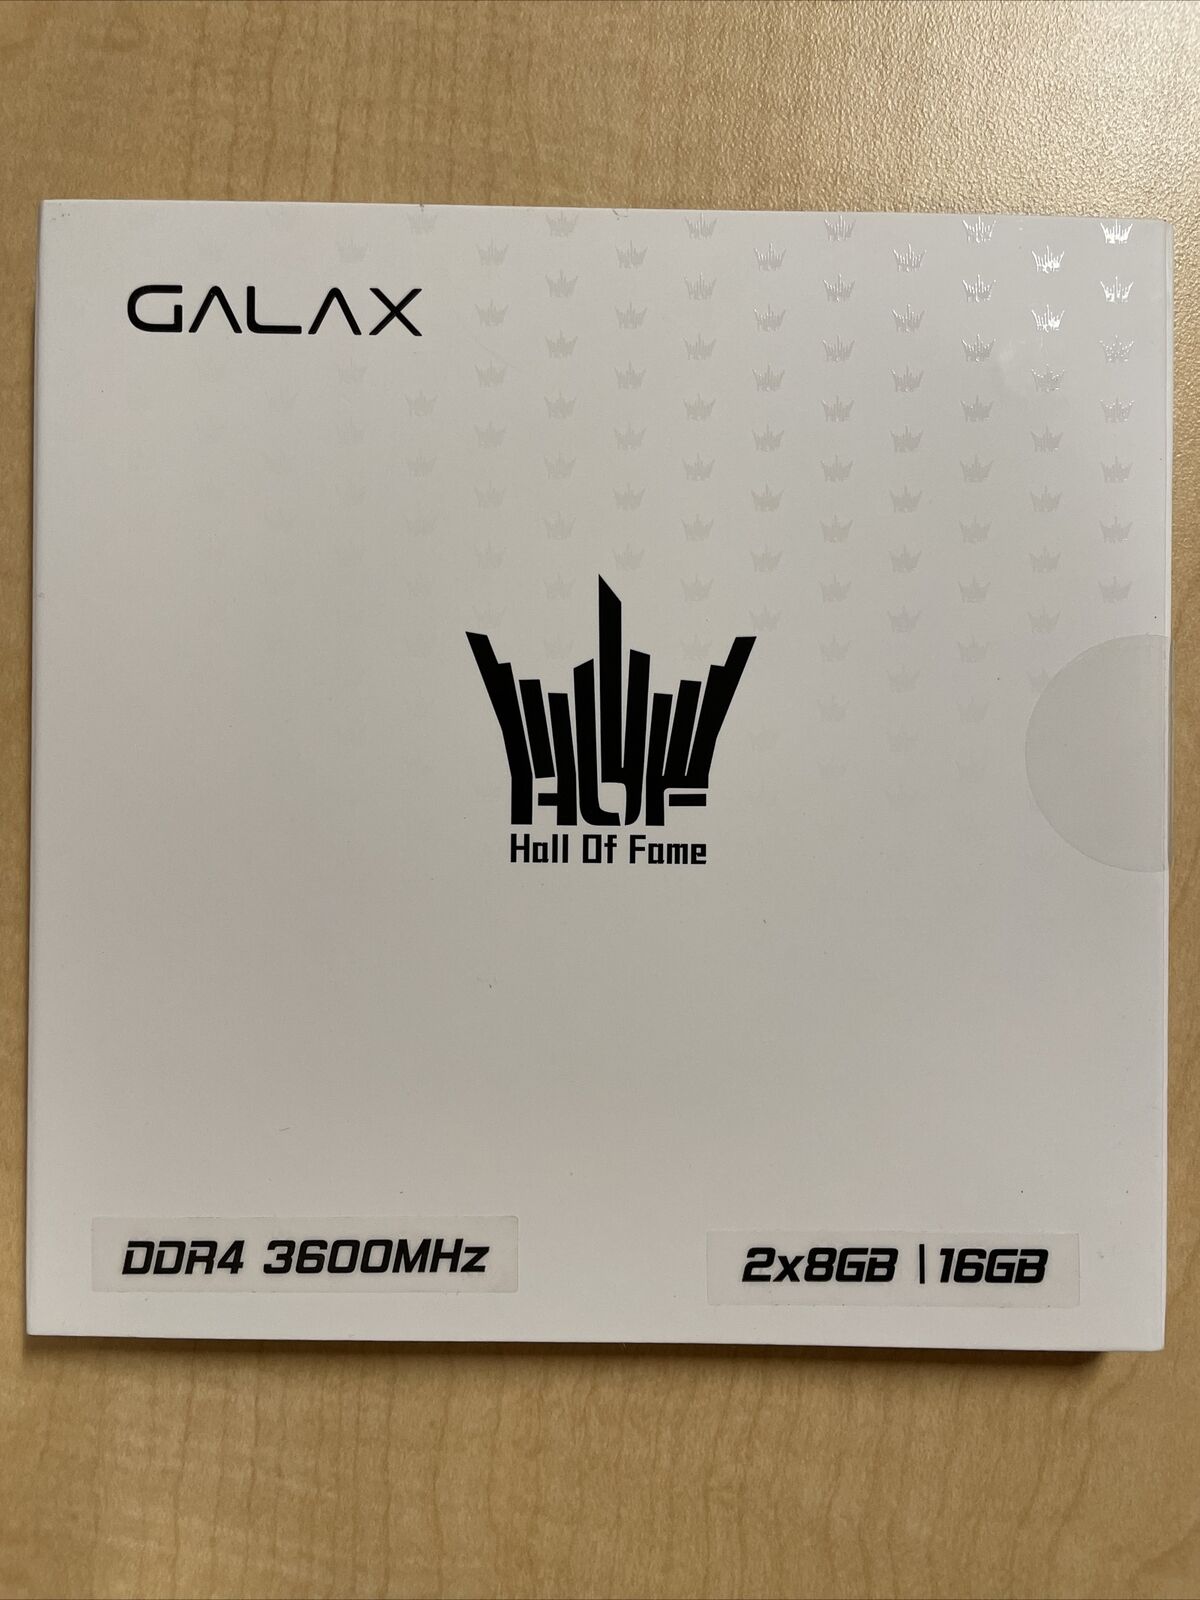 GALAX Hall Of Fame HOF DDR4 3600MHz 16GB (2x8GB) Memory Kit